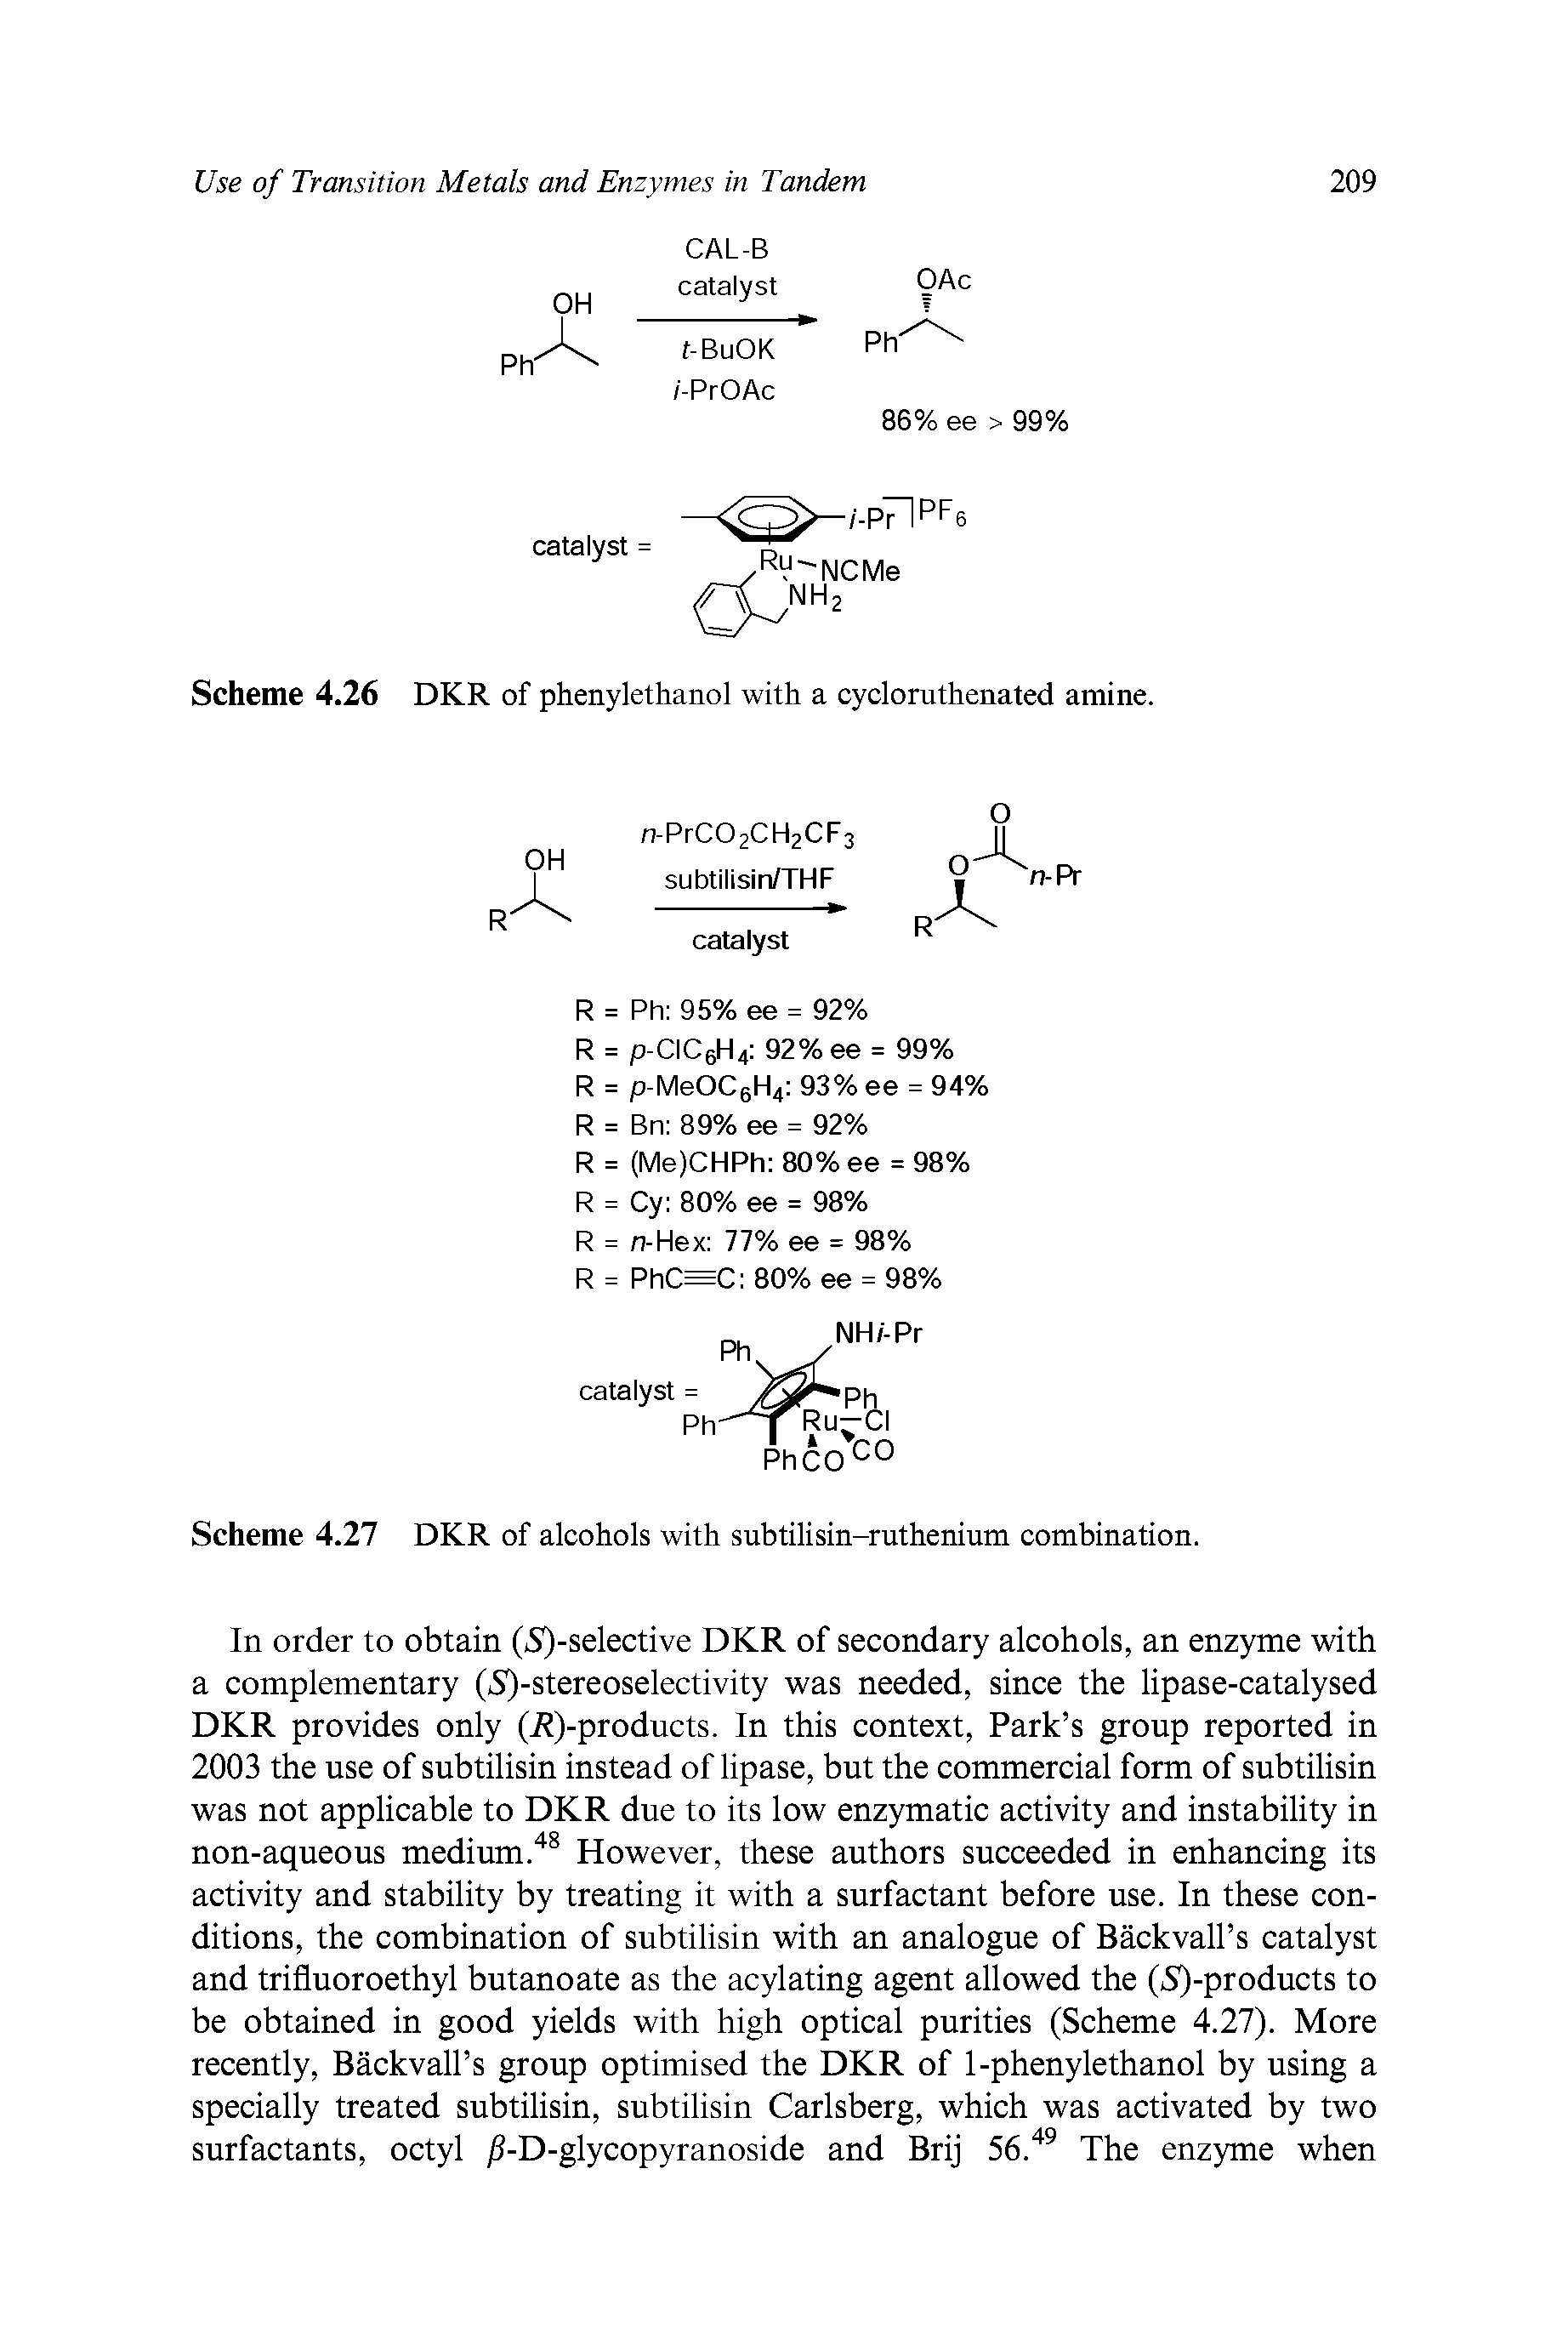 Scheme 4.27 DKR of alcohols with subtilisin-ruthenium combination.